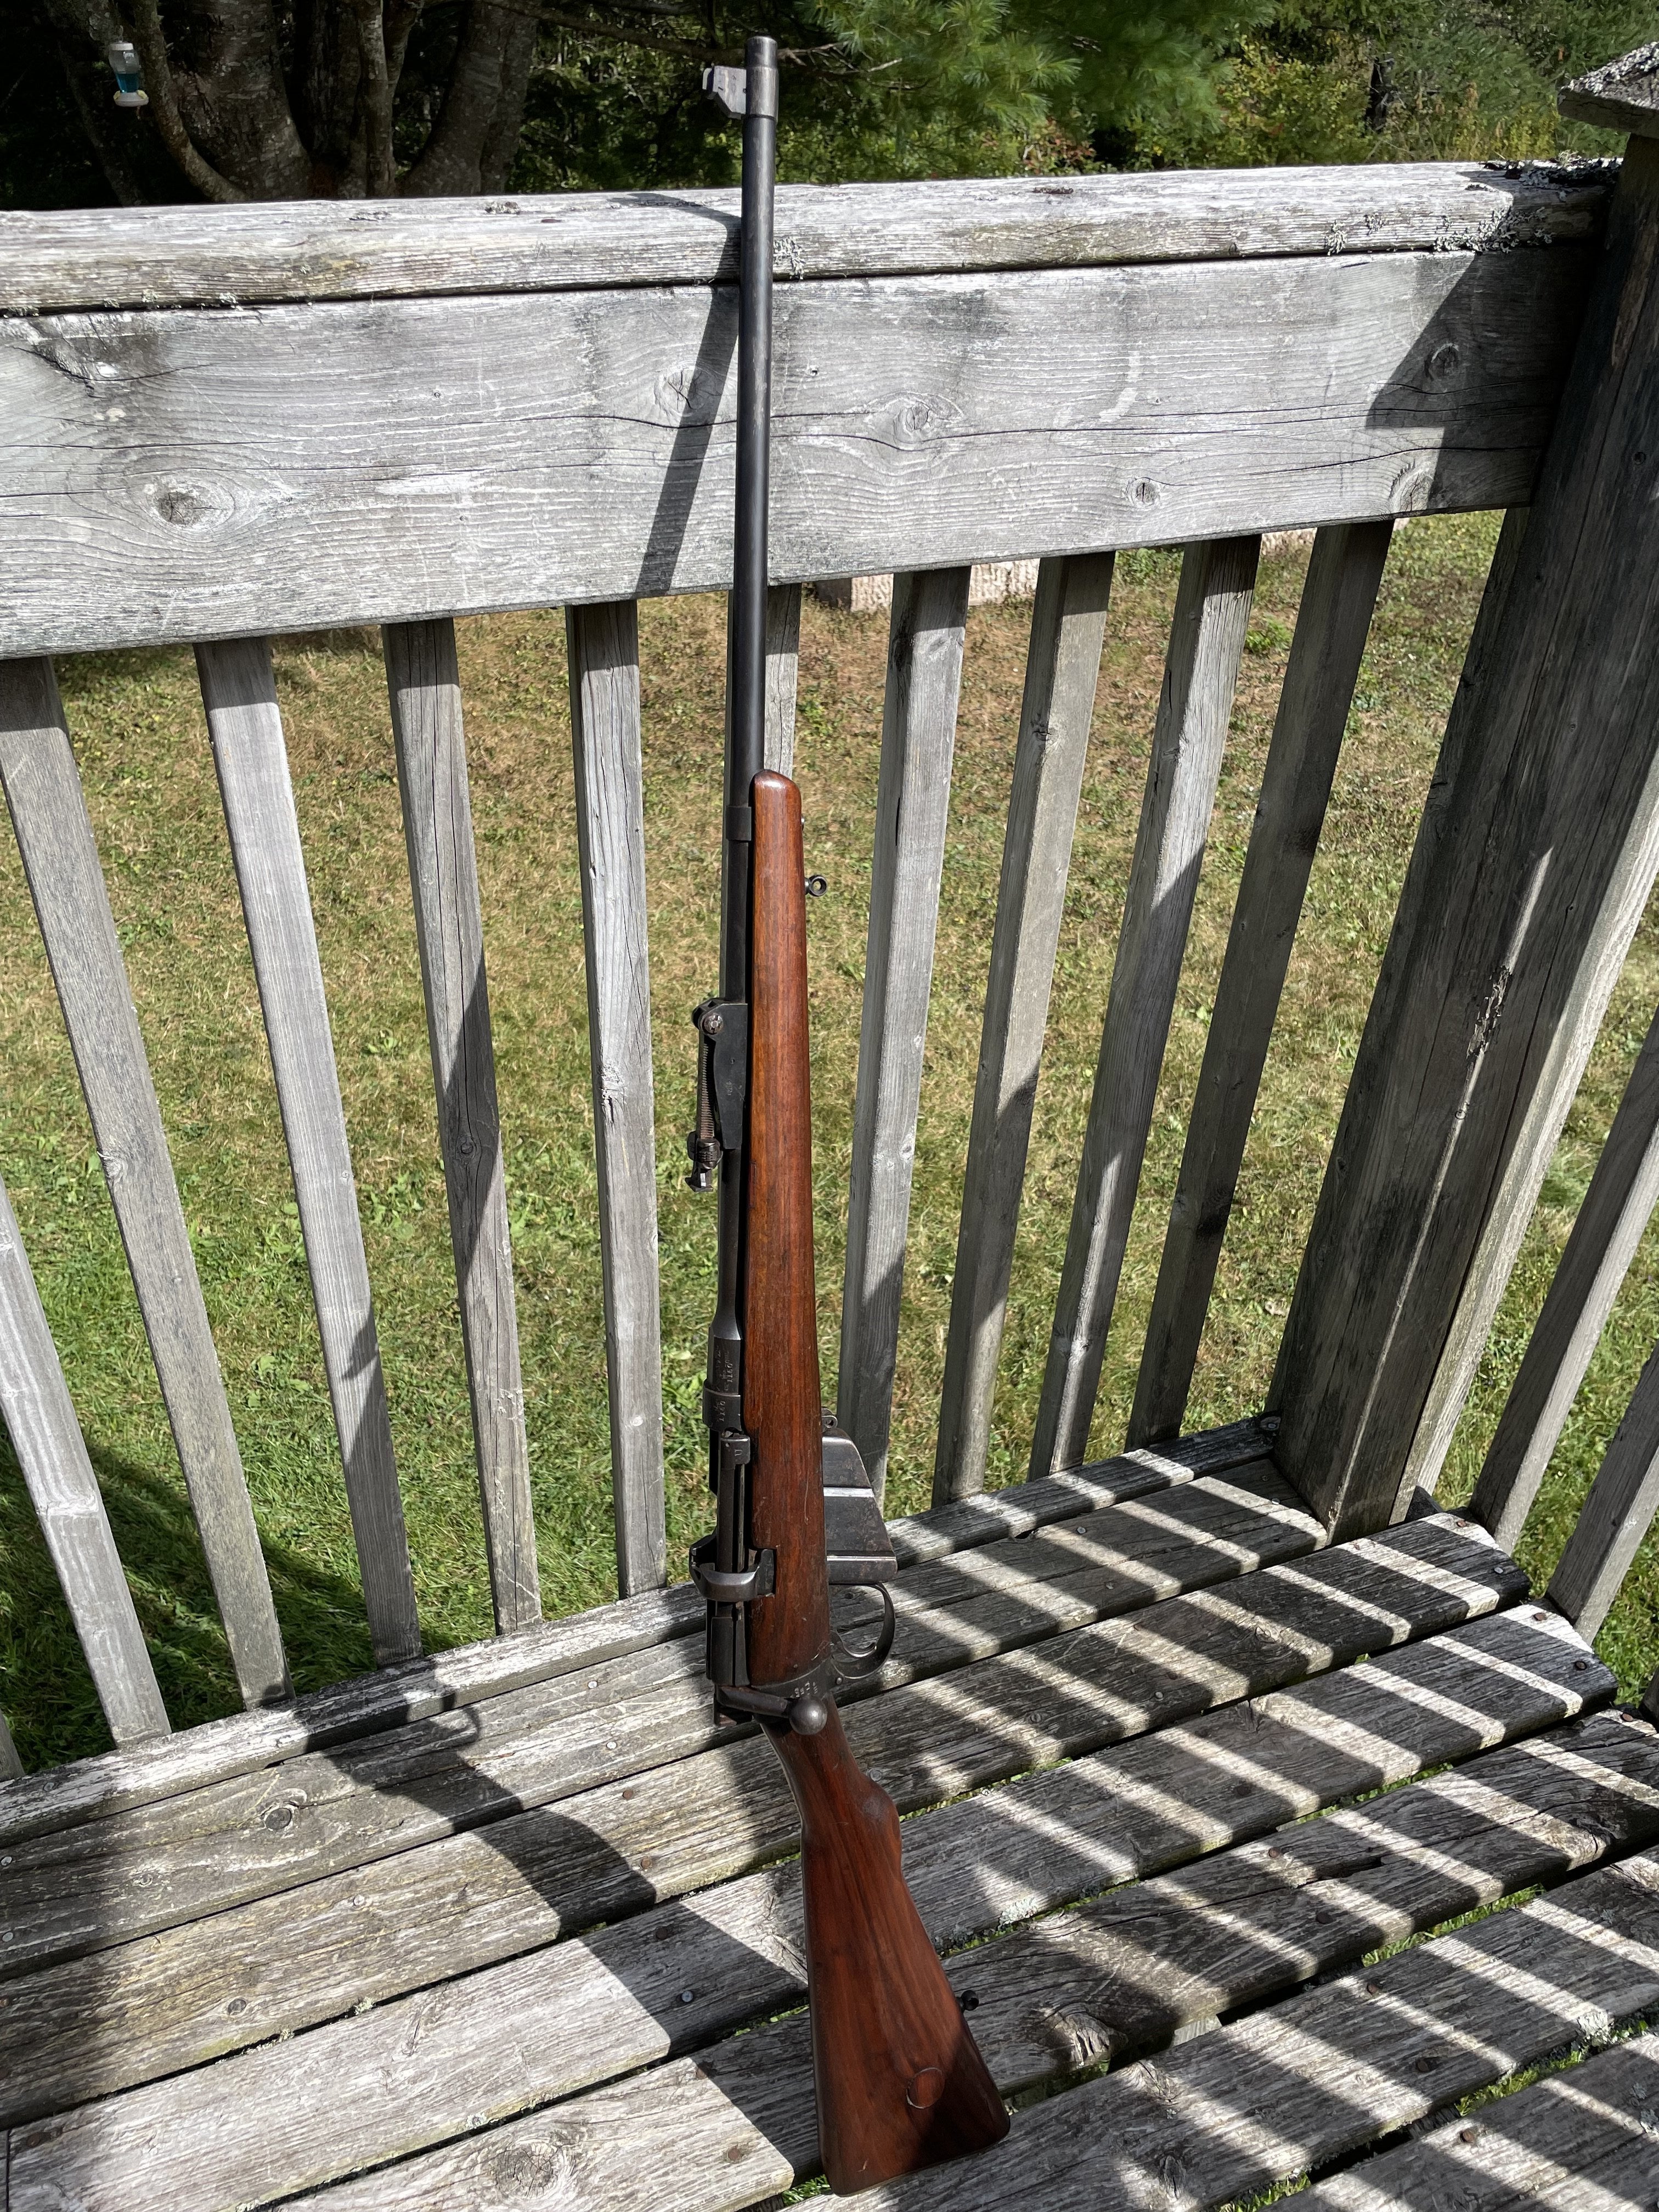 For Sale: Lee Enfield .303 British Rifle | Nova Scotia Hunting Forum